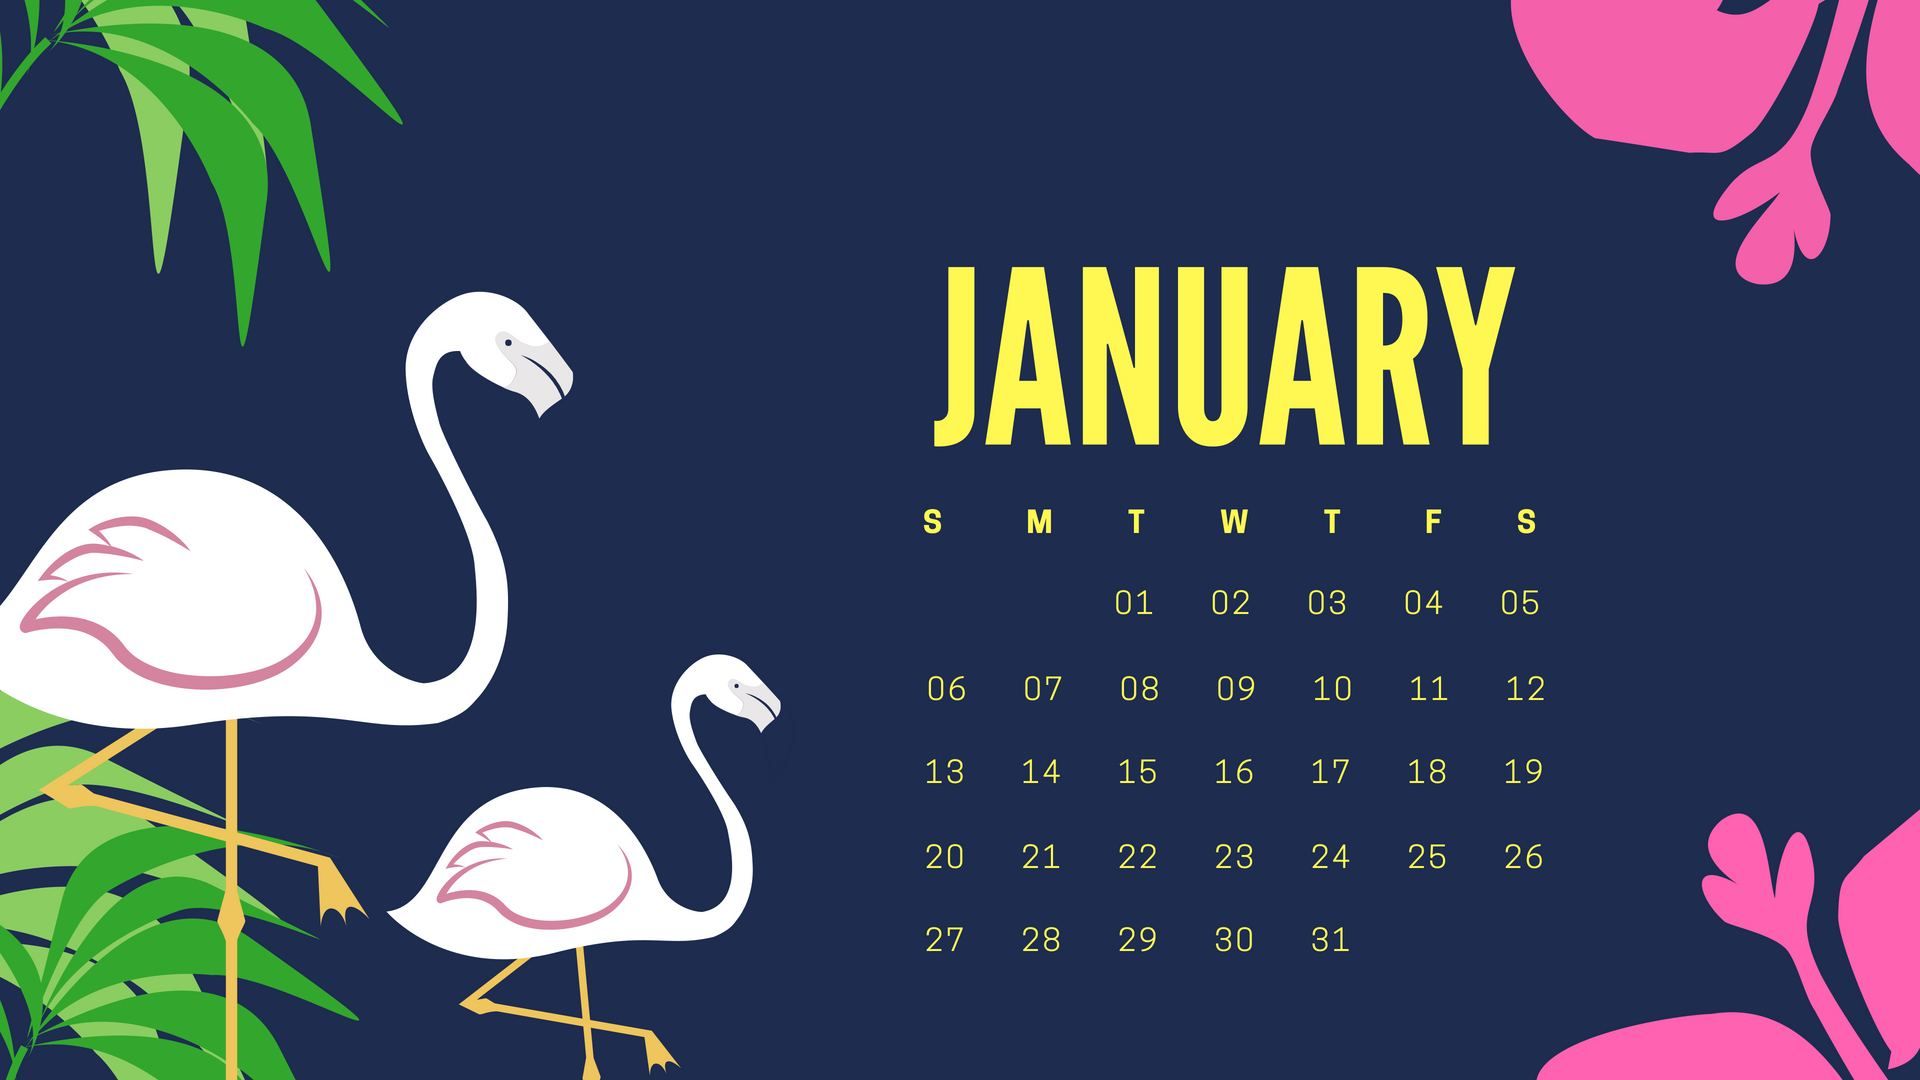 January Calendar Wallpaper Calendars In